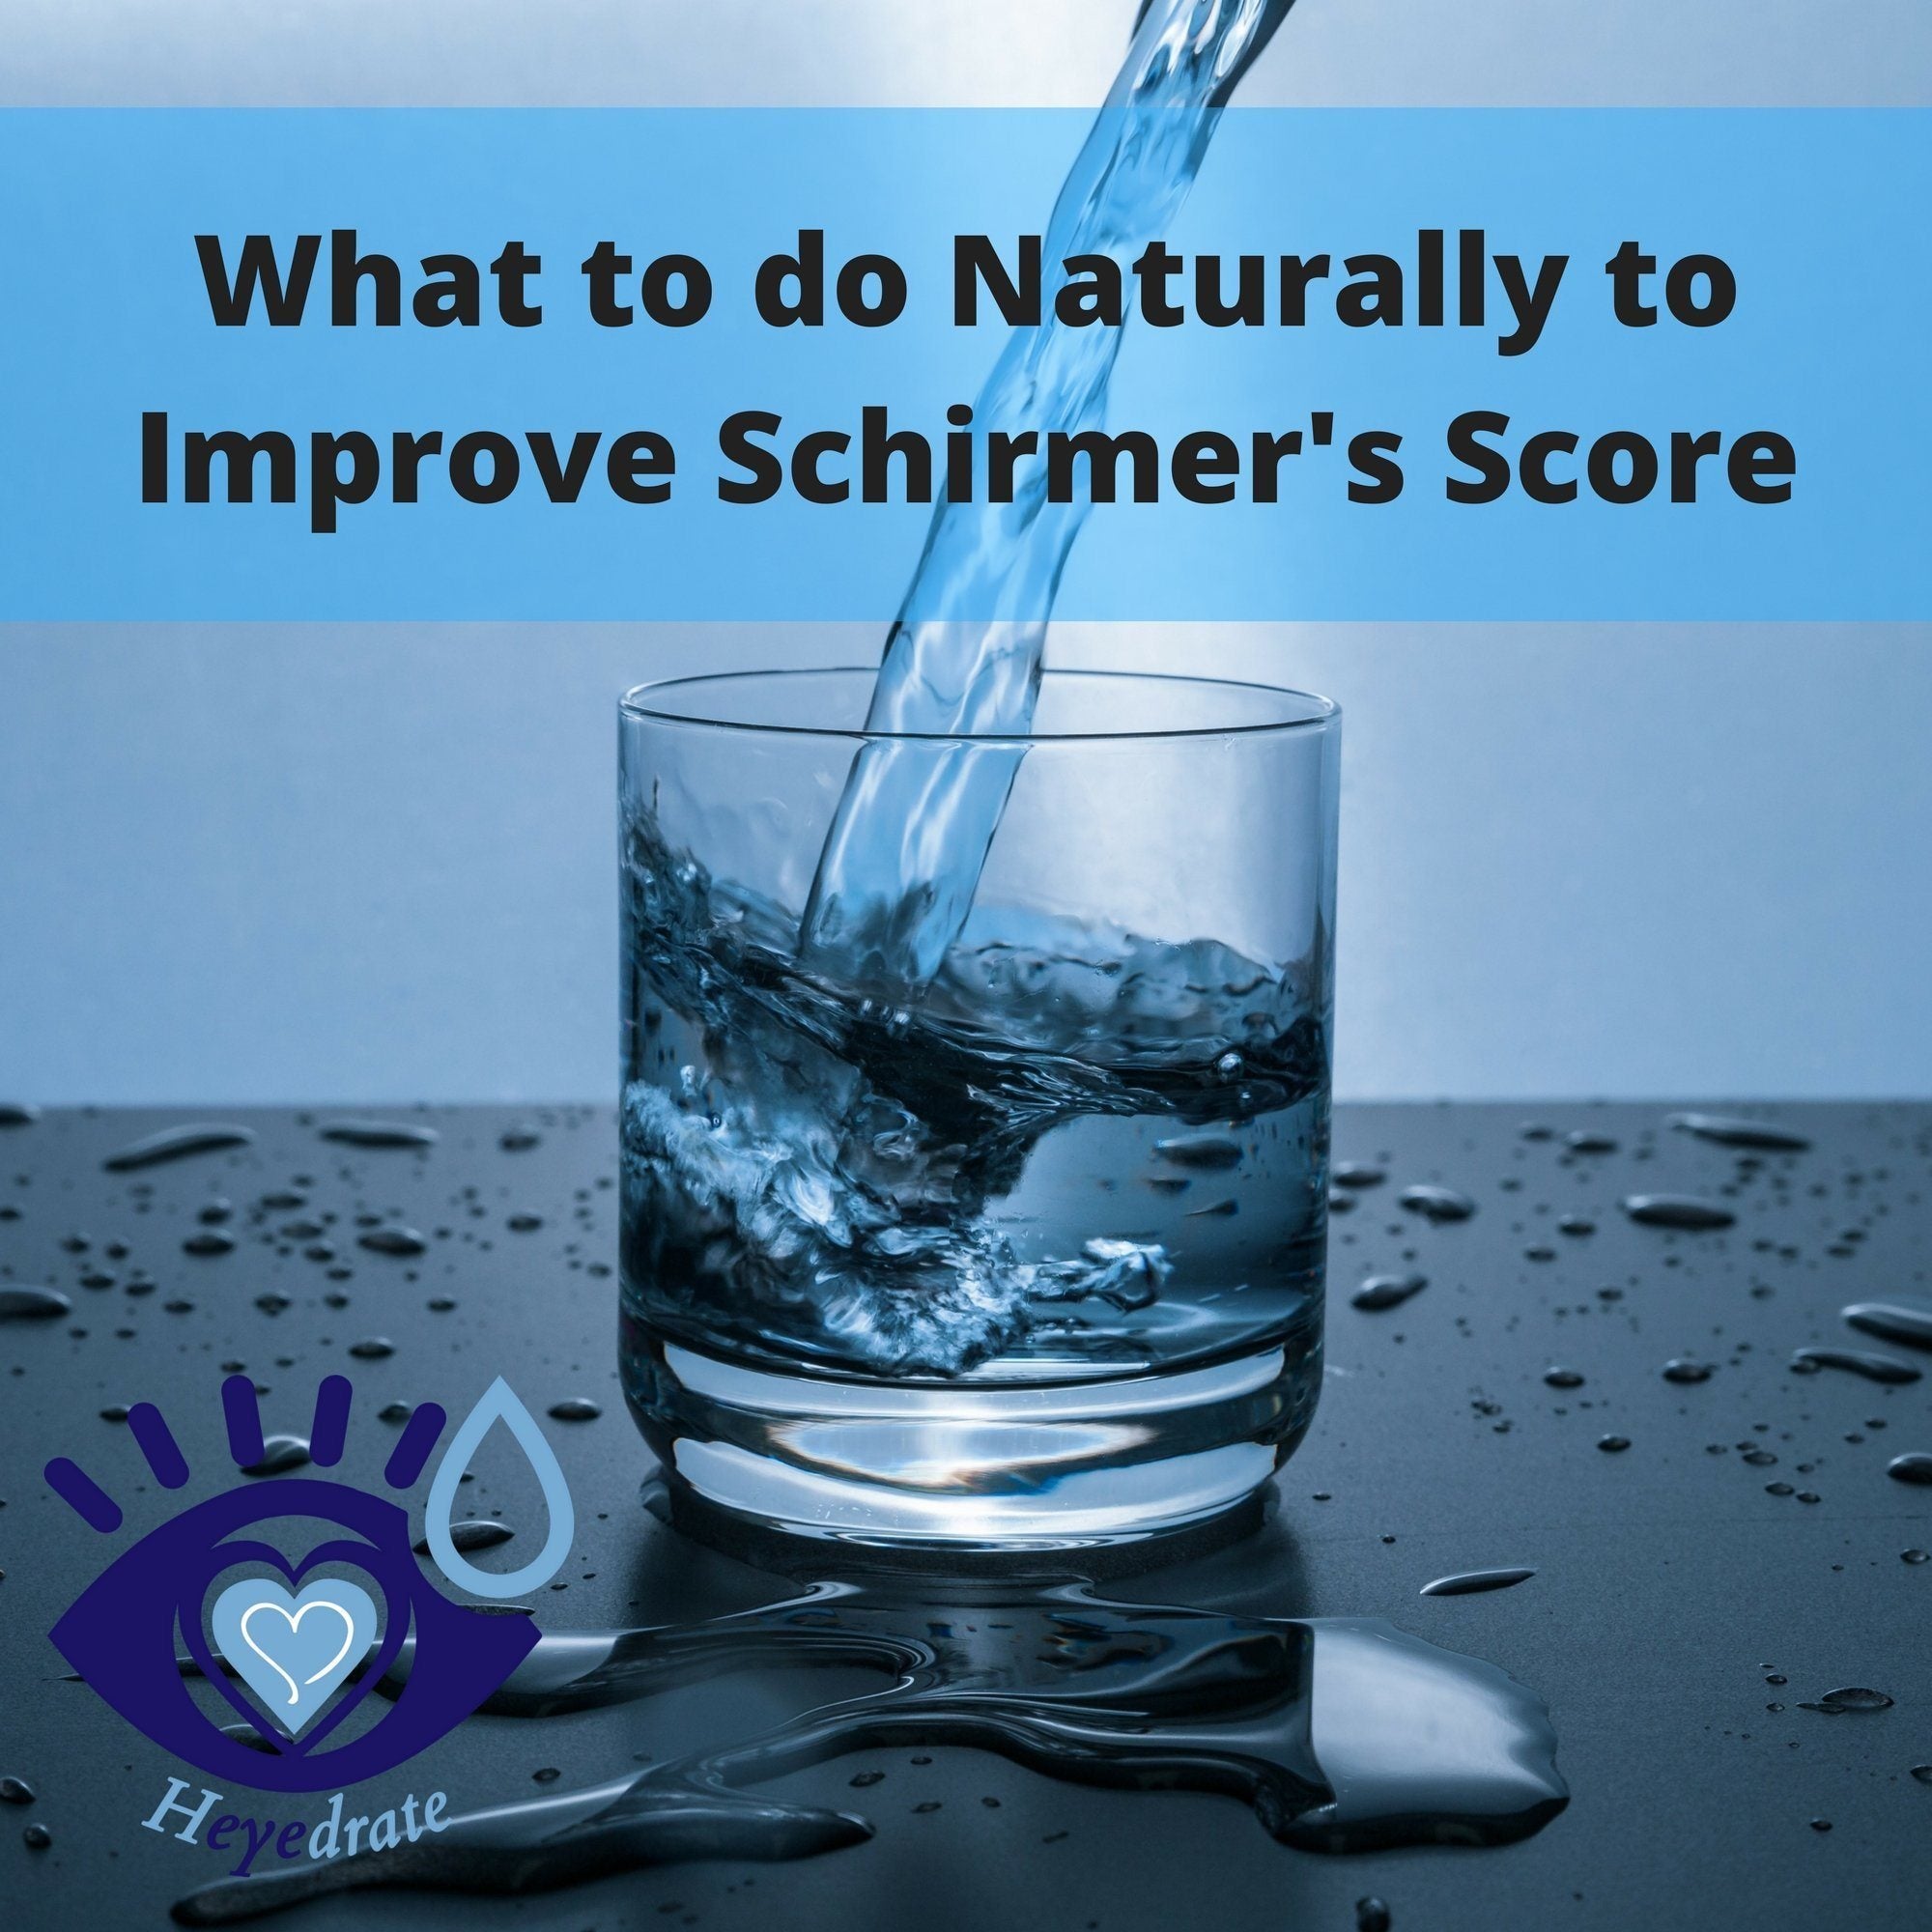 What to do Naturally to Improve Schirmer's Score